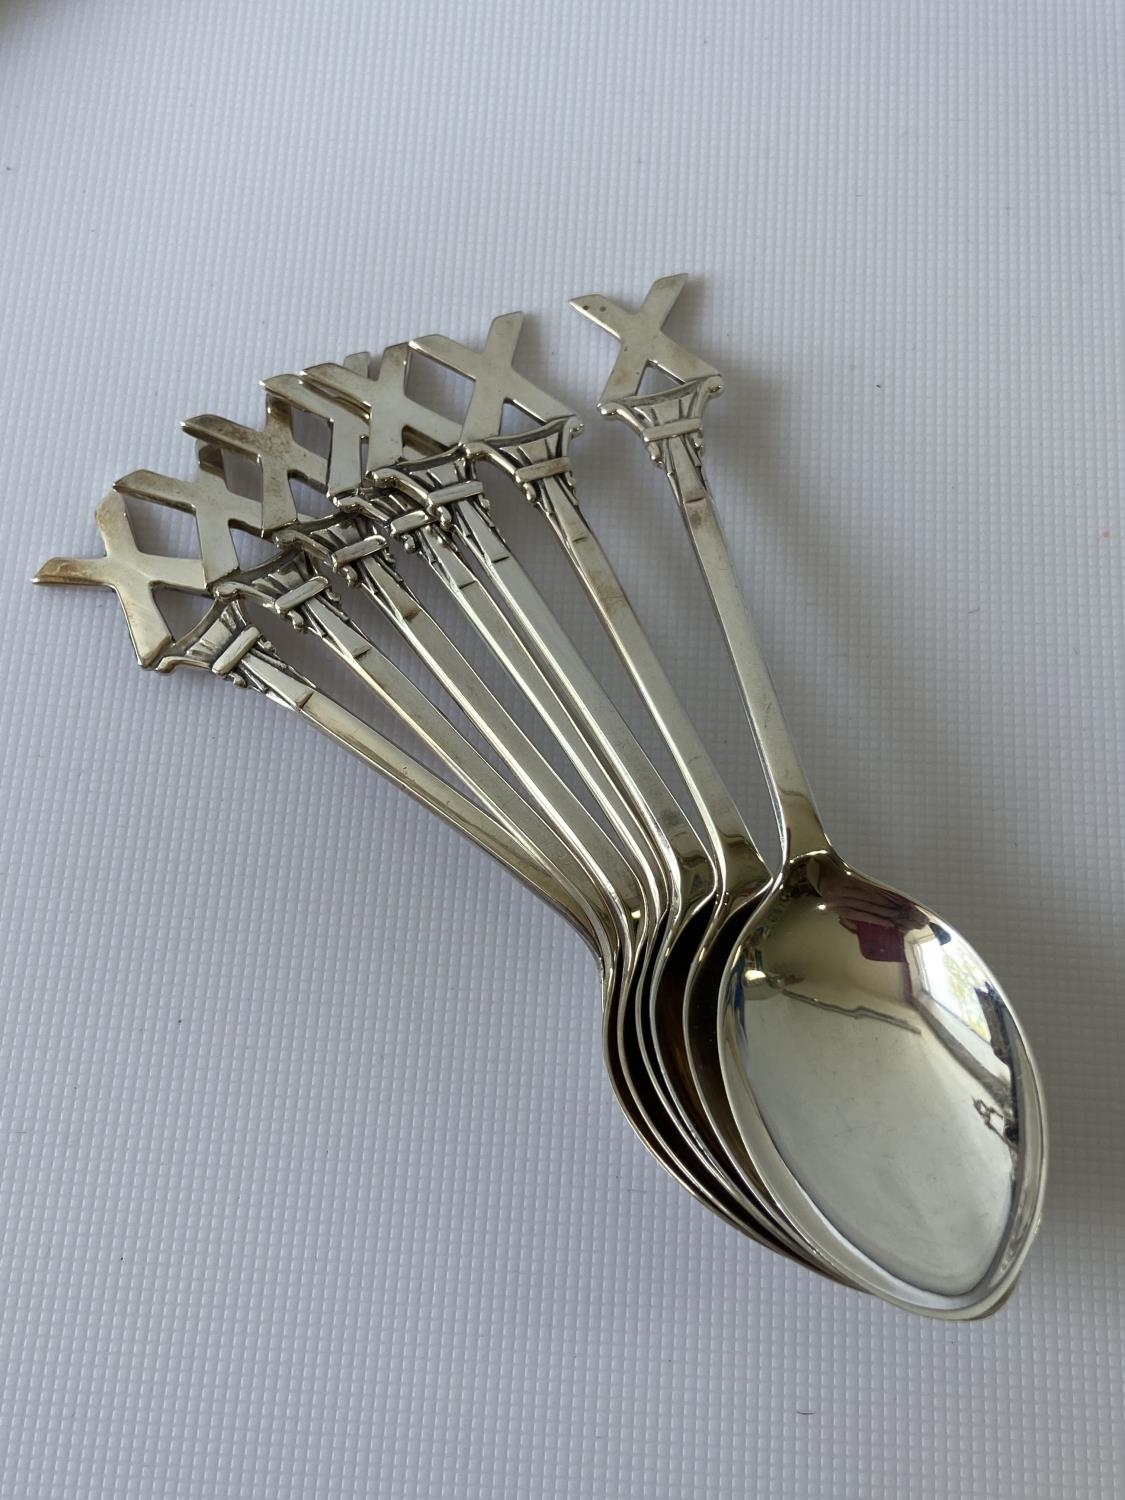 A set of 7 Birmingham silver tea spoons [J.B Chatterley & Sons Ltd] [74.63g] - Image 2 of 4